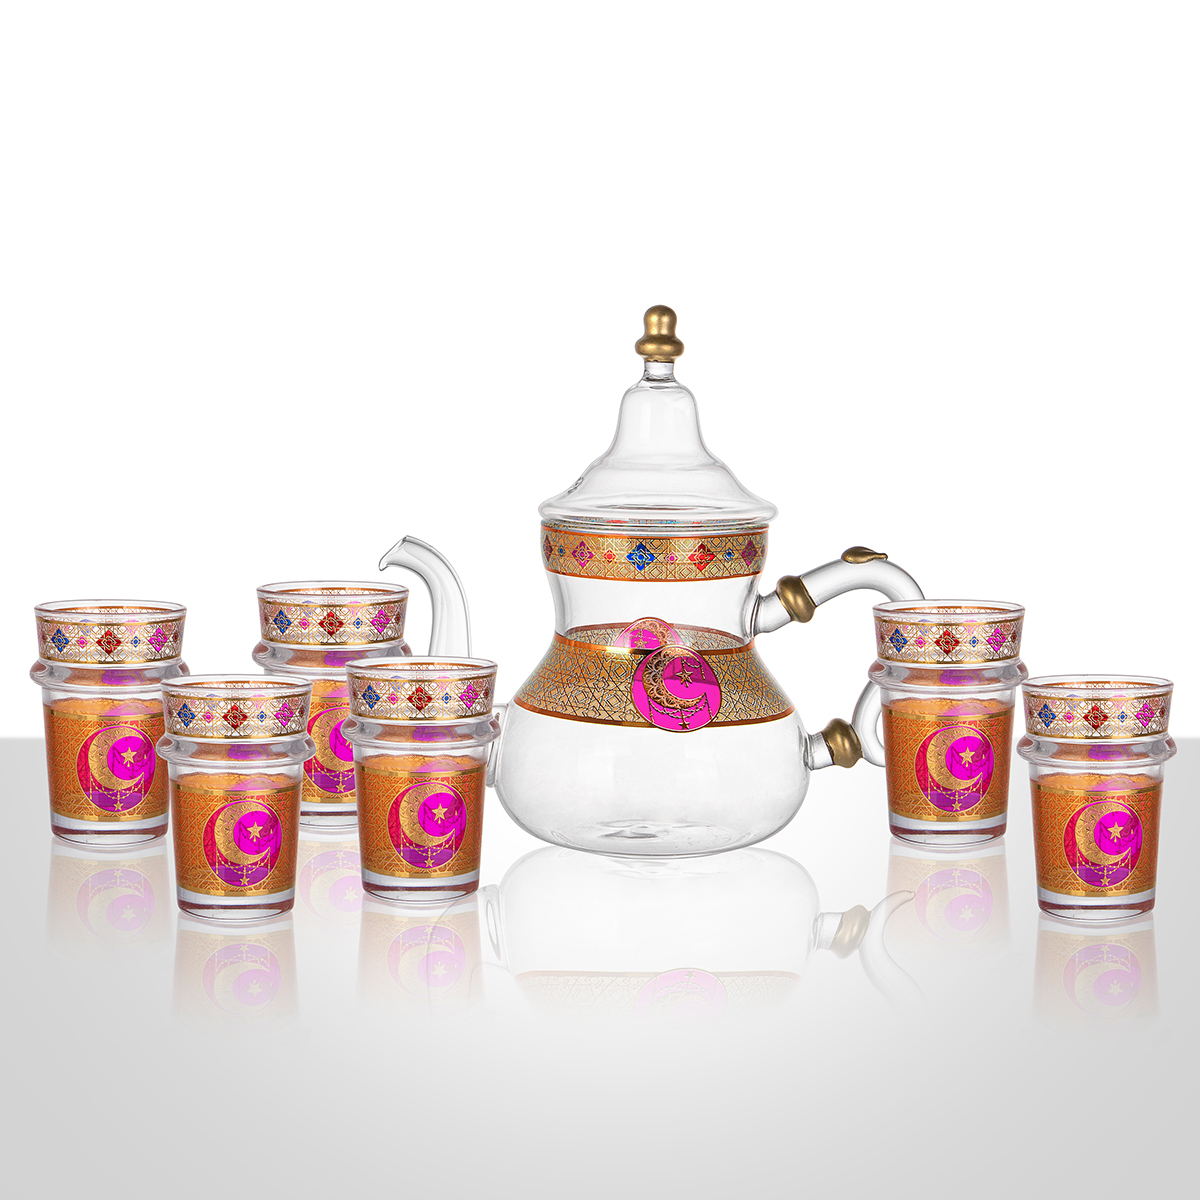 Middle east design 7pcs glass jug set